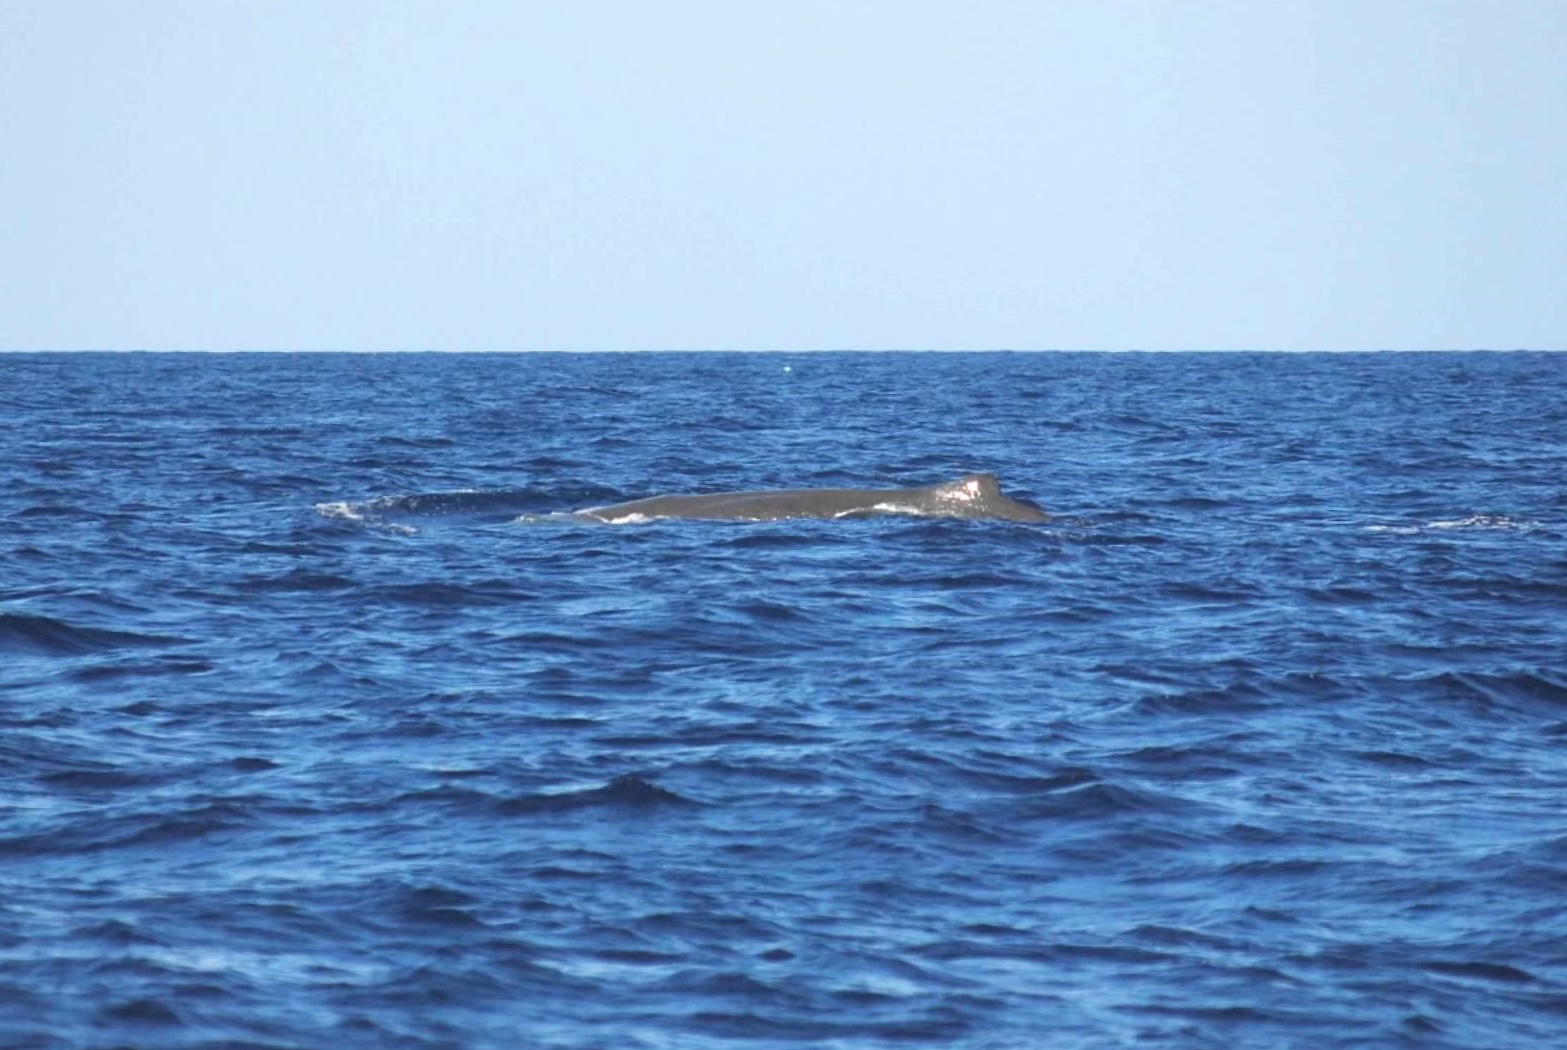 Sperm whale sighting - Sao Miguel Island, Azores